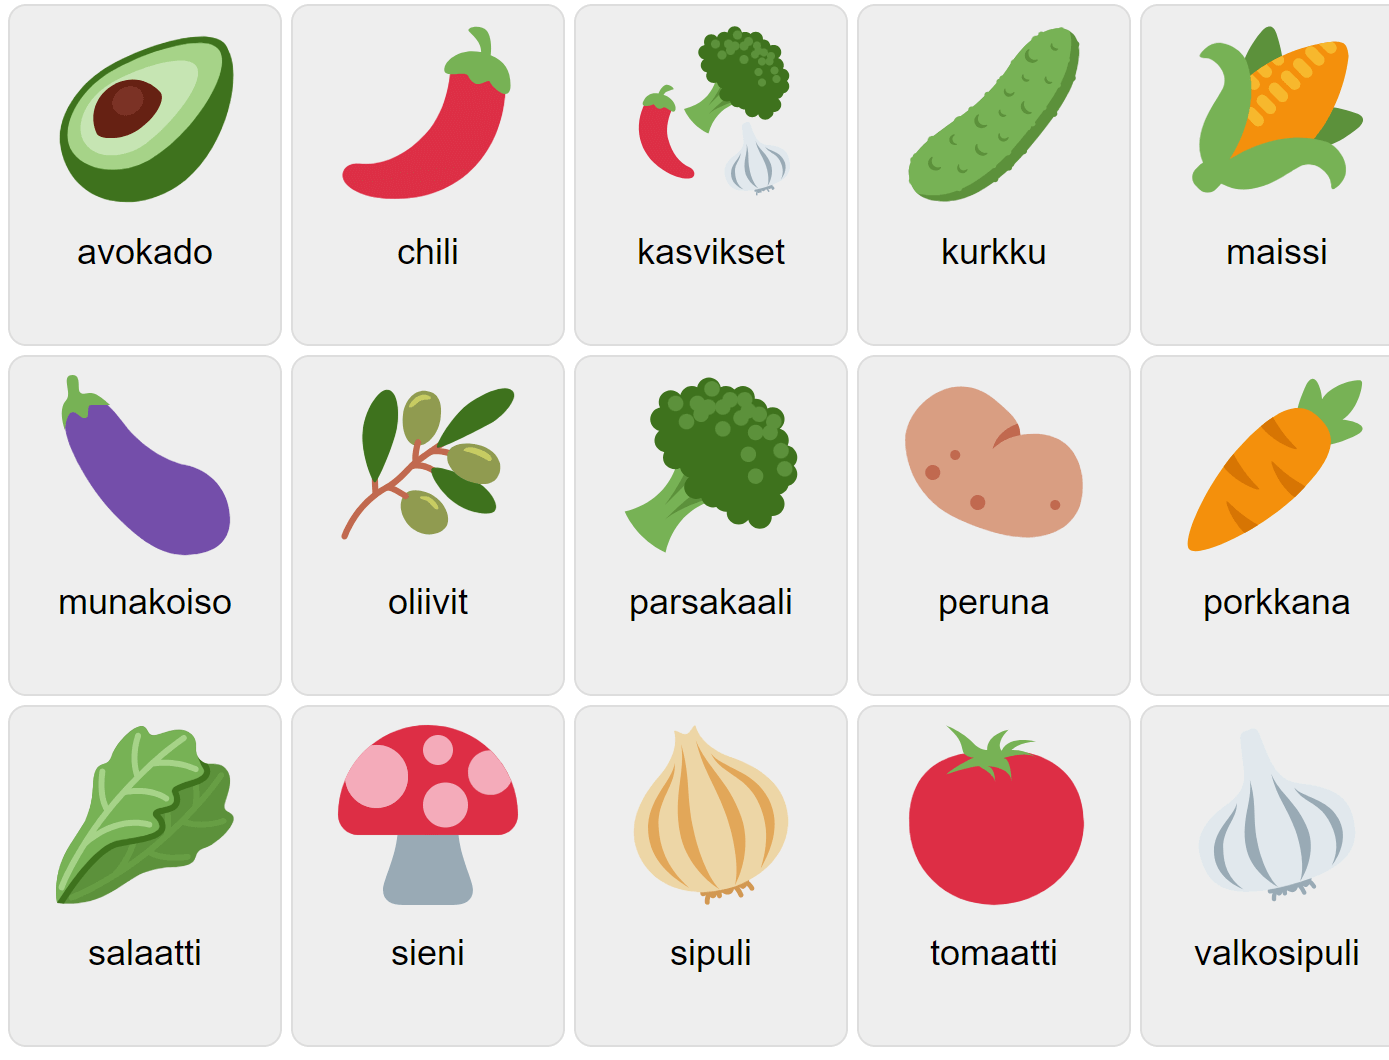 Vegetables in Finnish